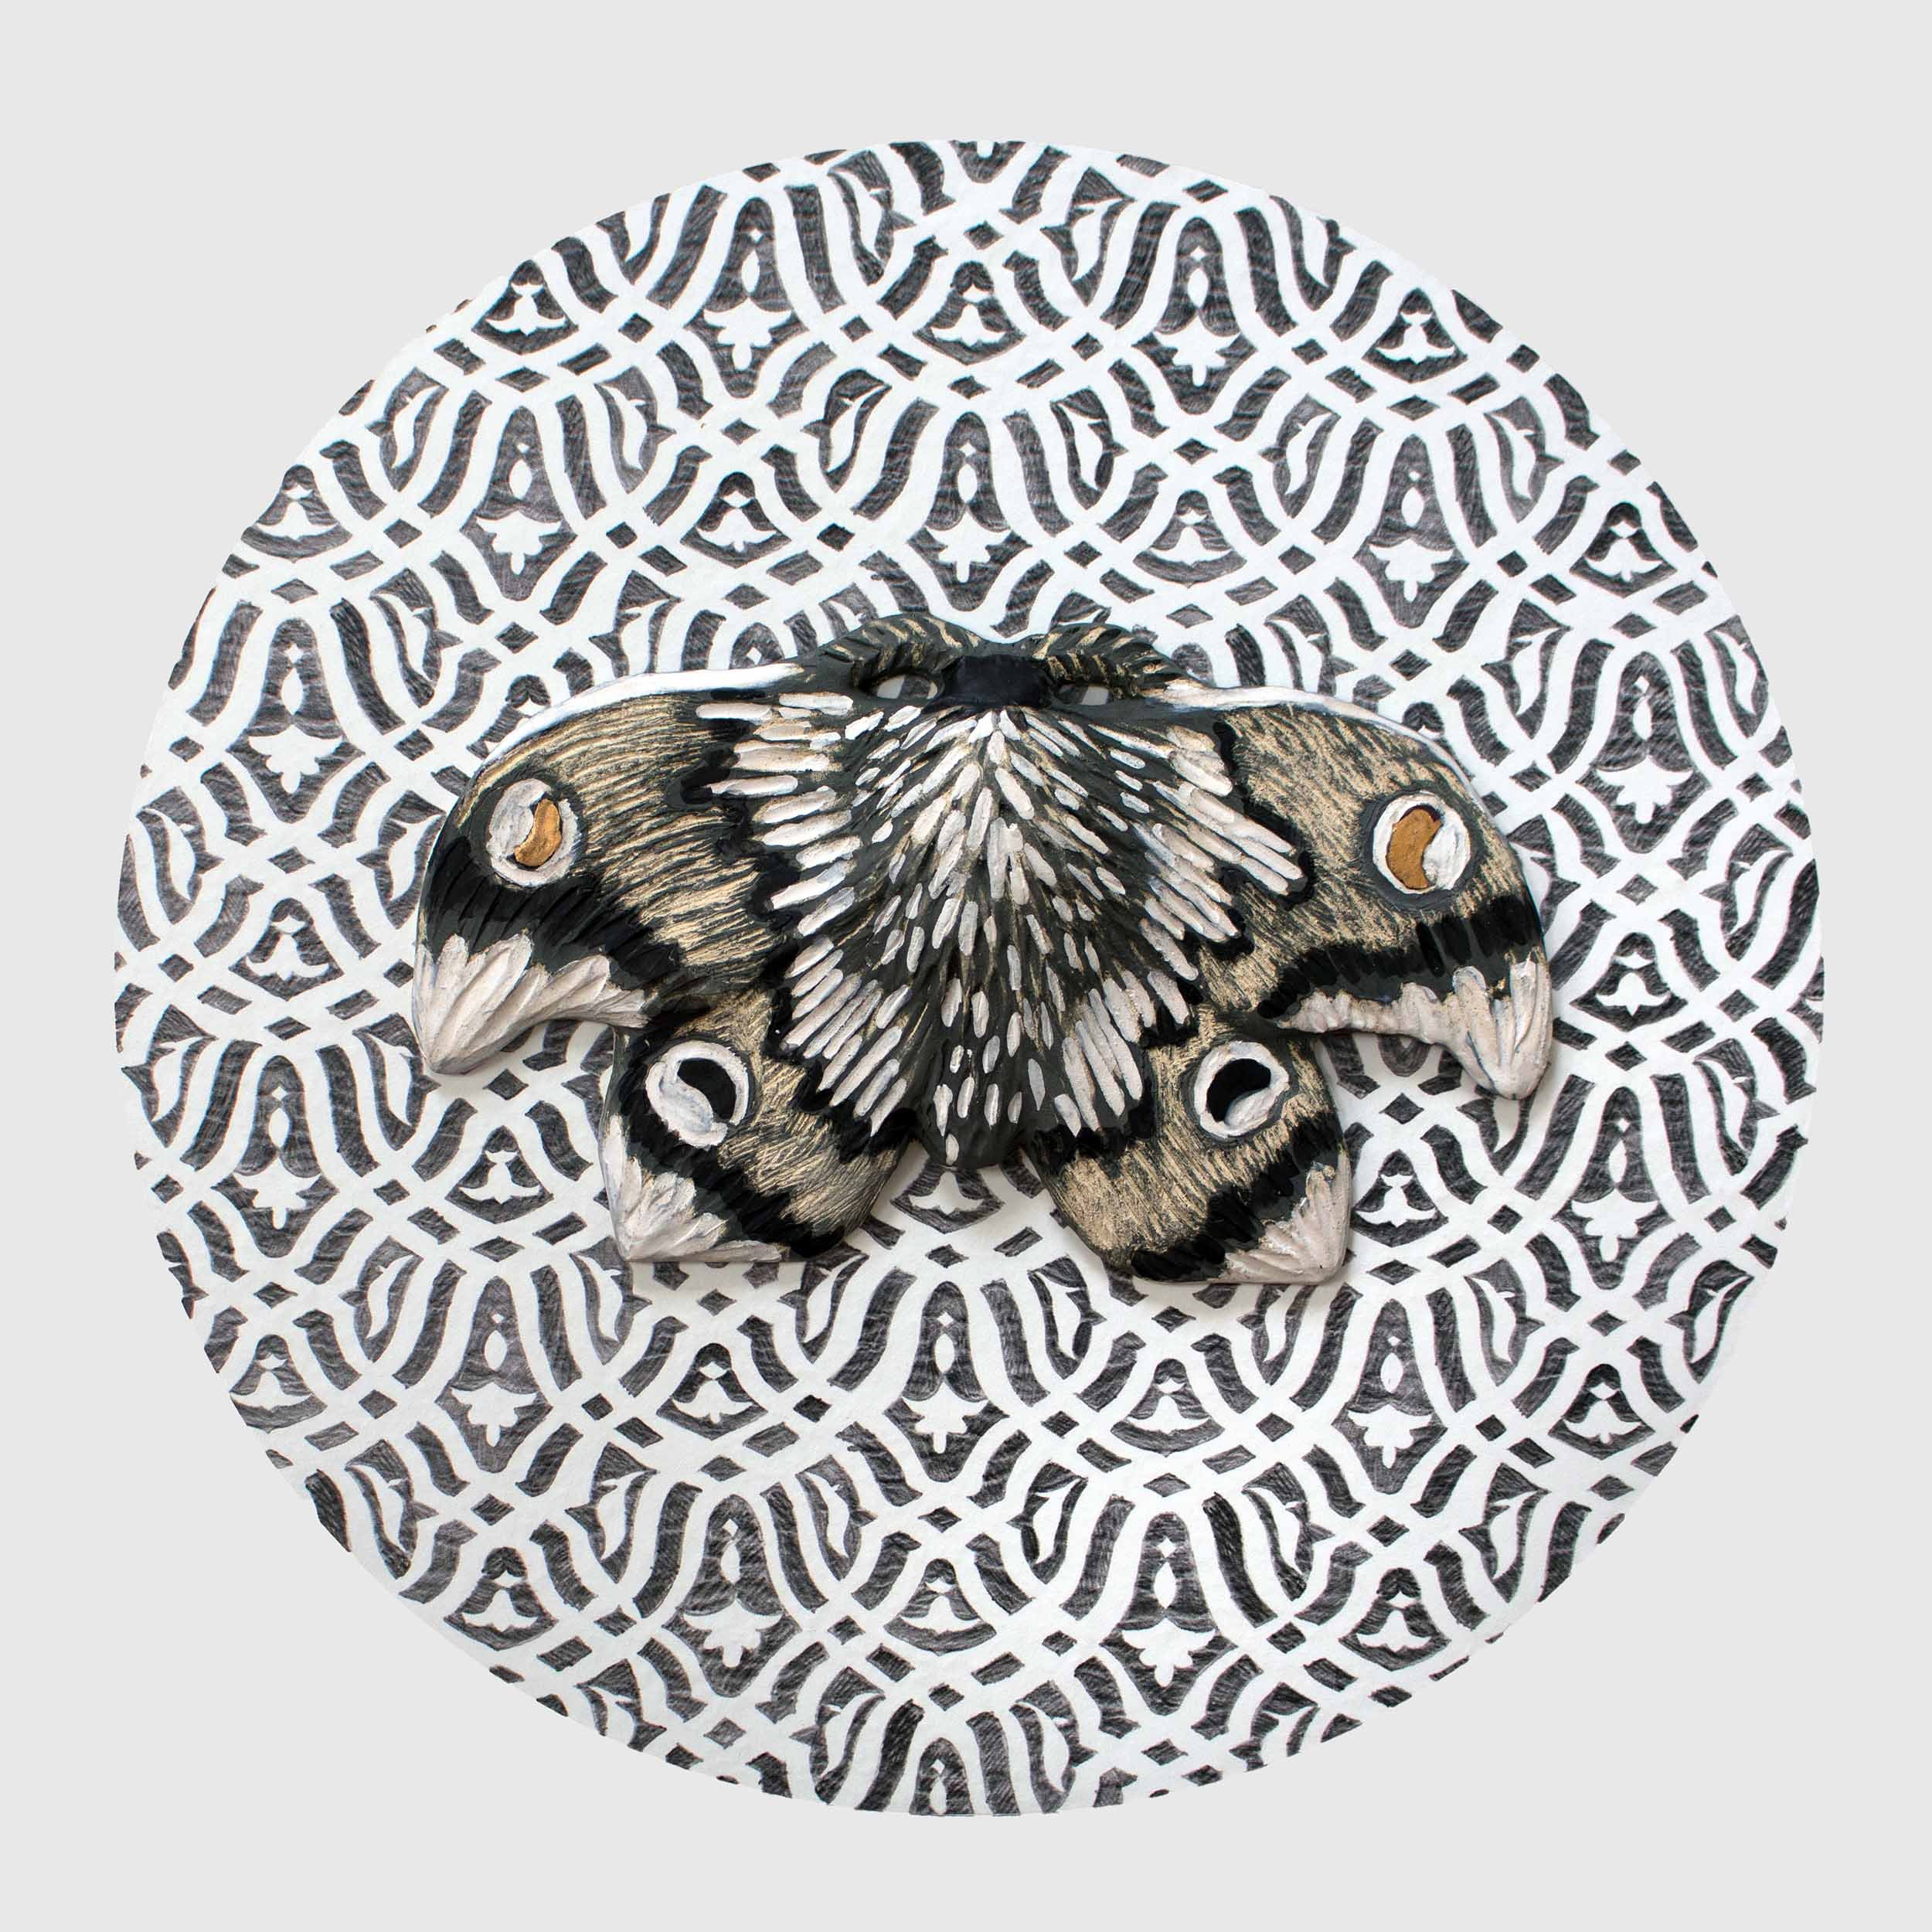   Moth 06,  ceramic moth mounted on wallpaper backdrop, 11.5”x11.5”x.5”, SOLD 